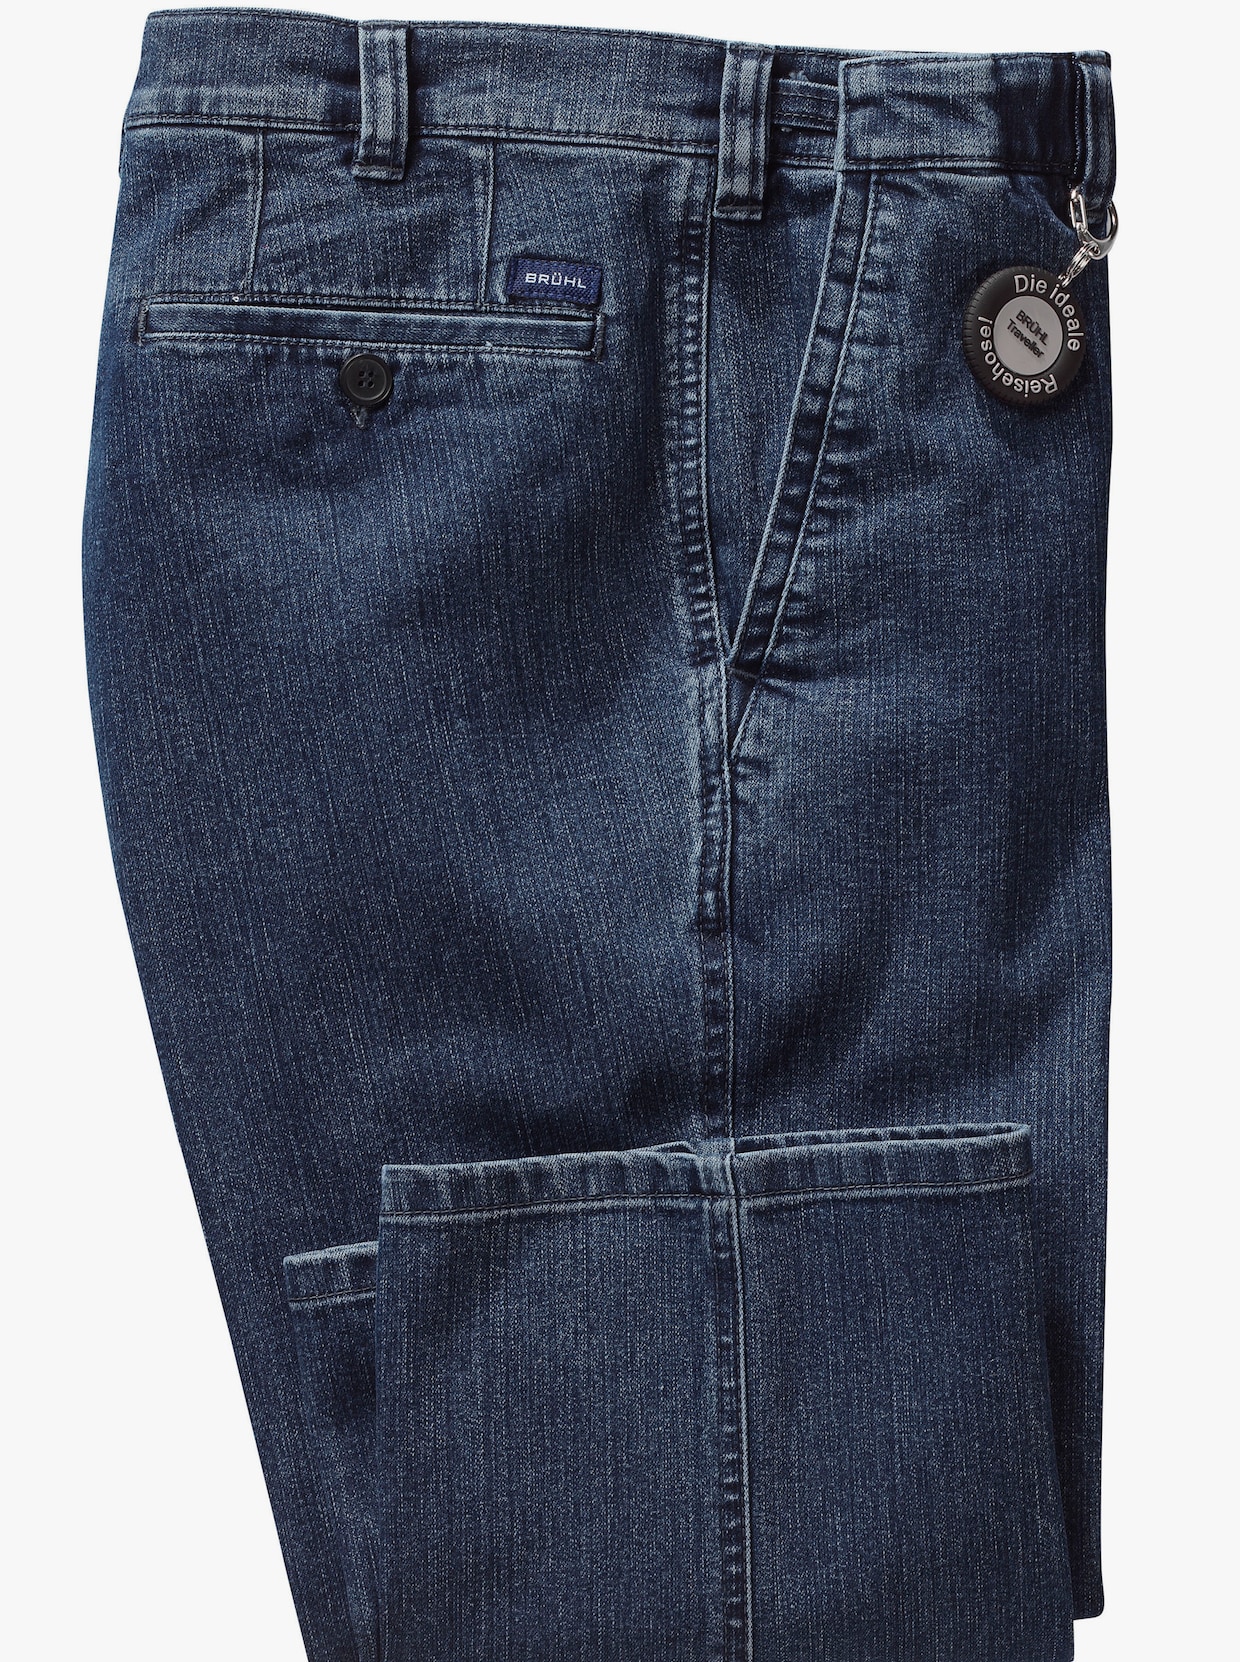 Traveller-jeans - blue-stonewashed